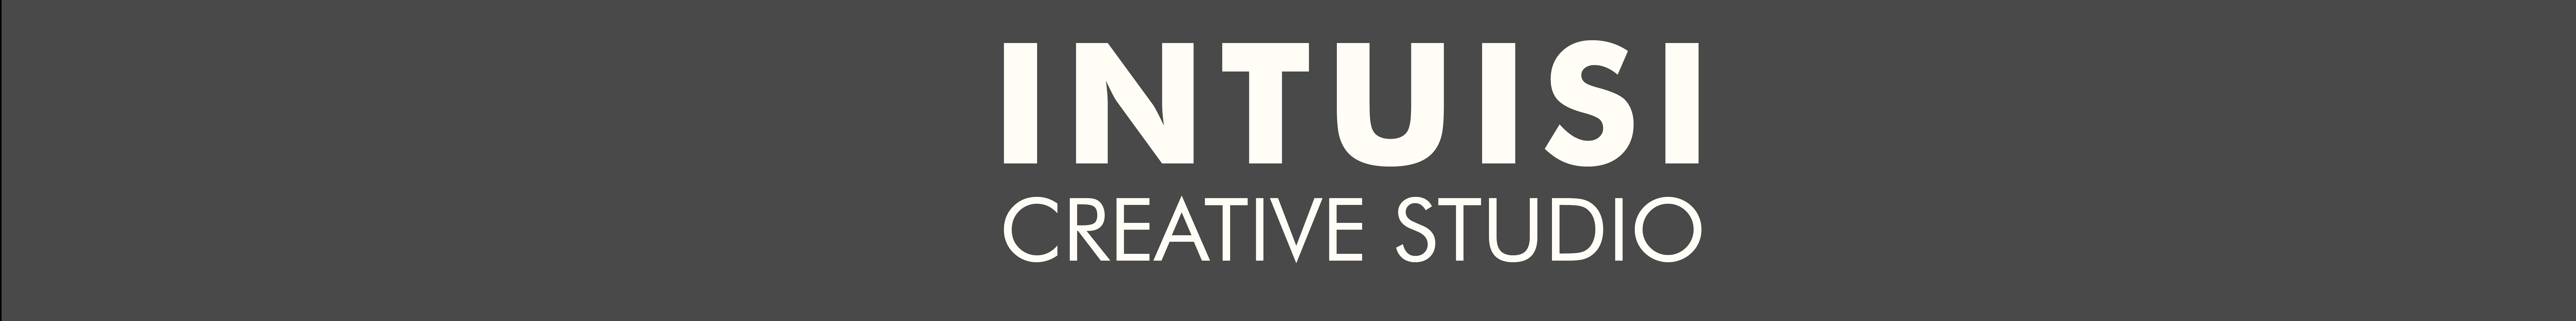 Intuisi Creative Studio's profile banner